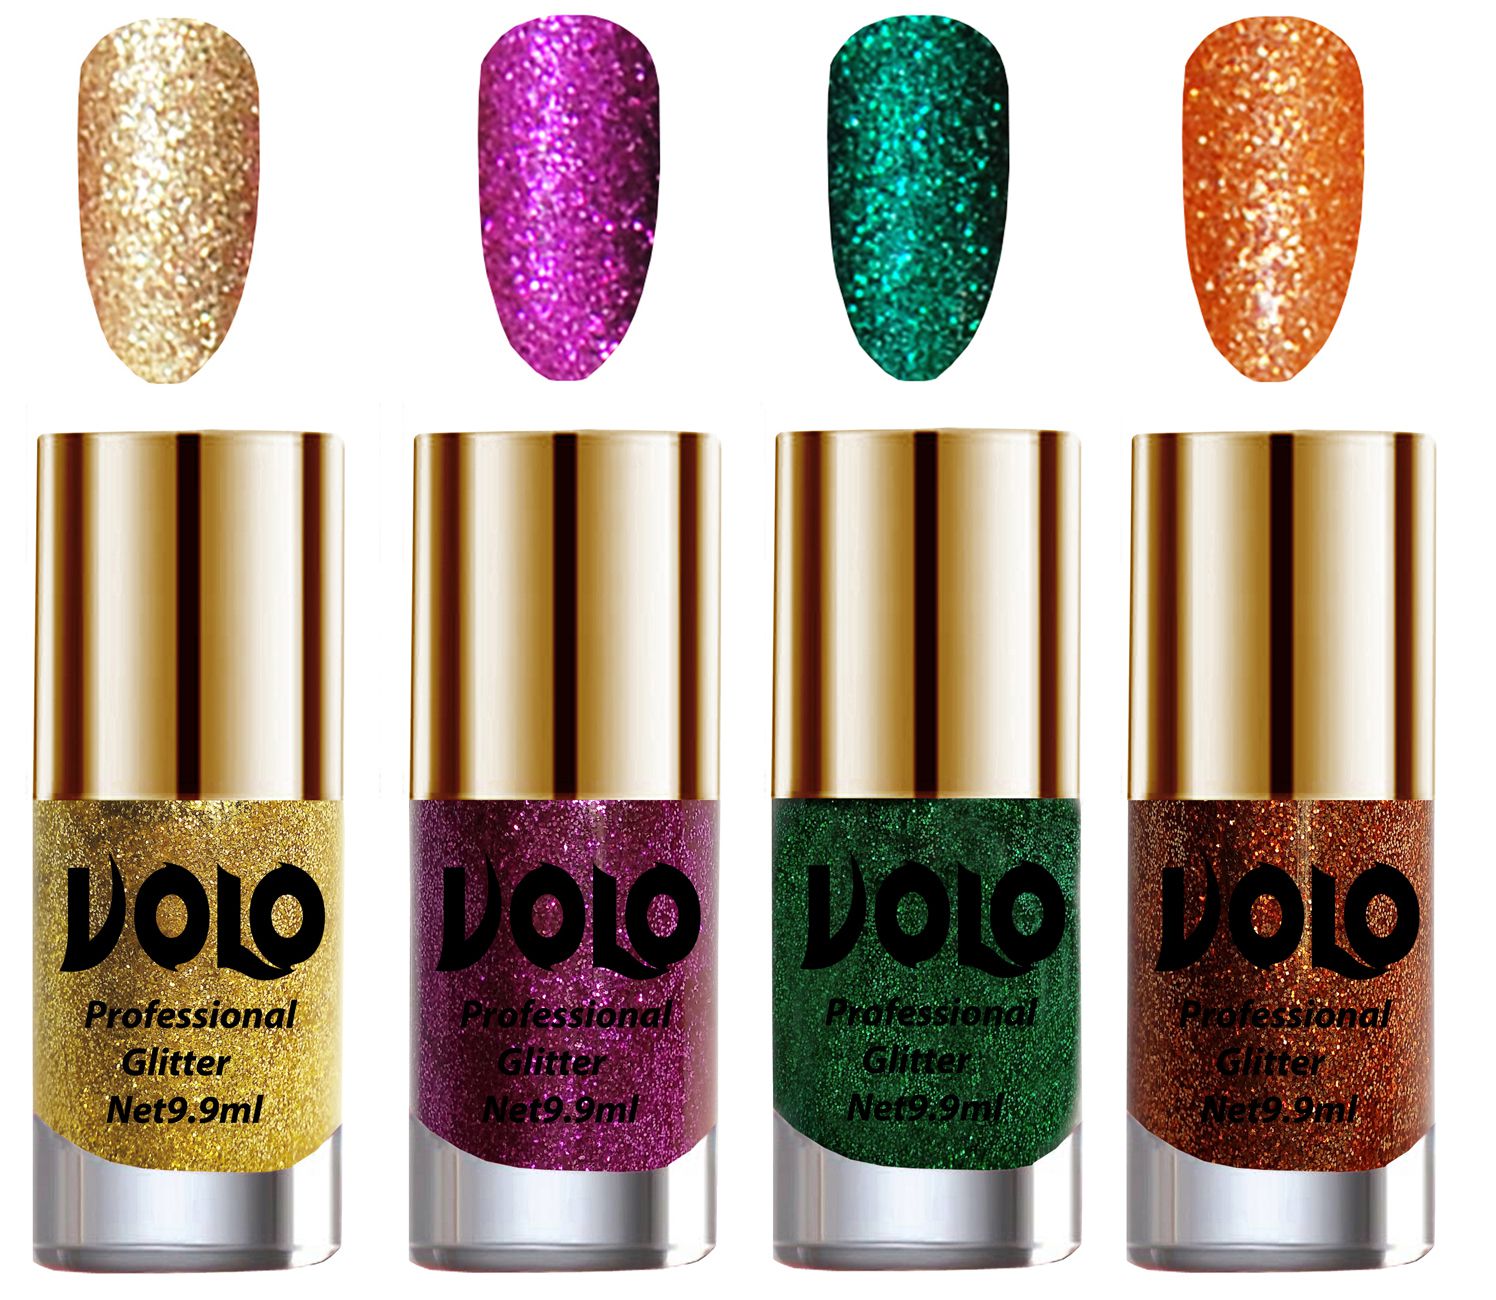     			VOLO Professionally Used Glitter Shine Nail Polish Gold,Purple,Green Orange Pack of 4 39 mL